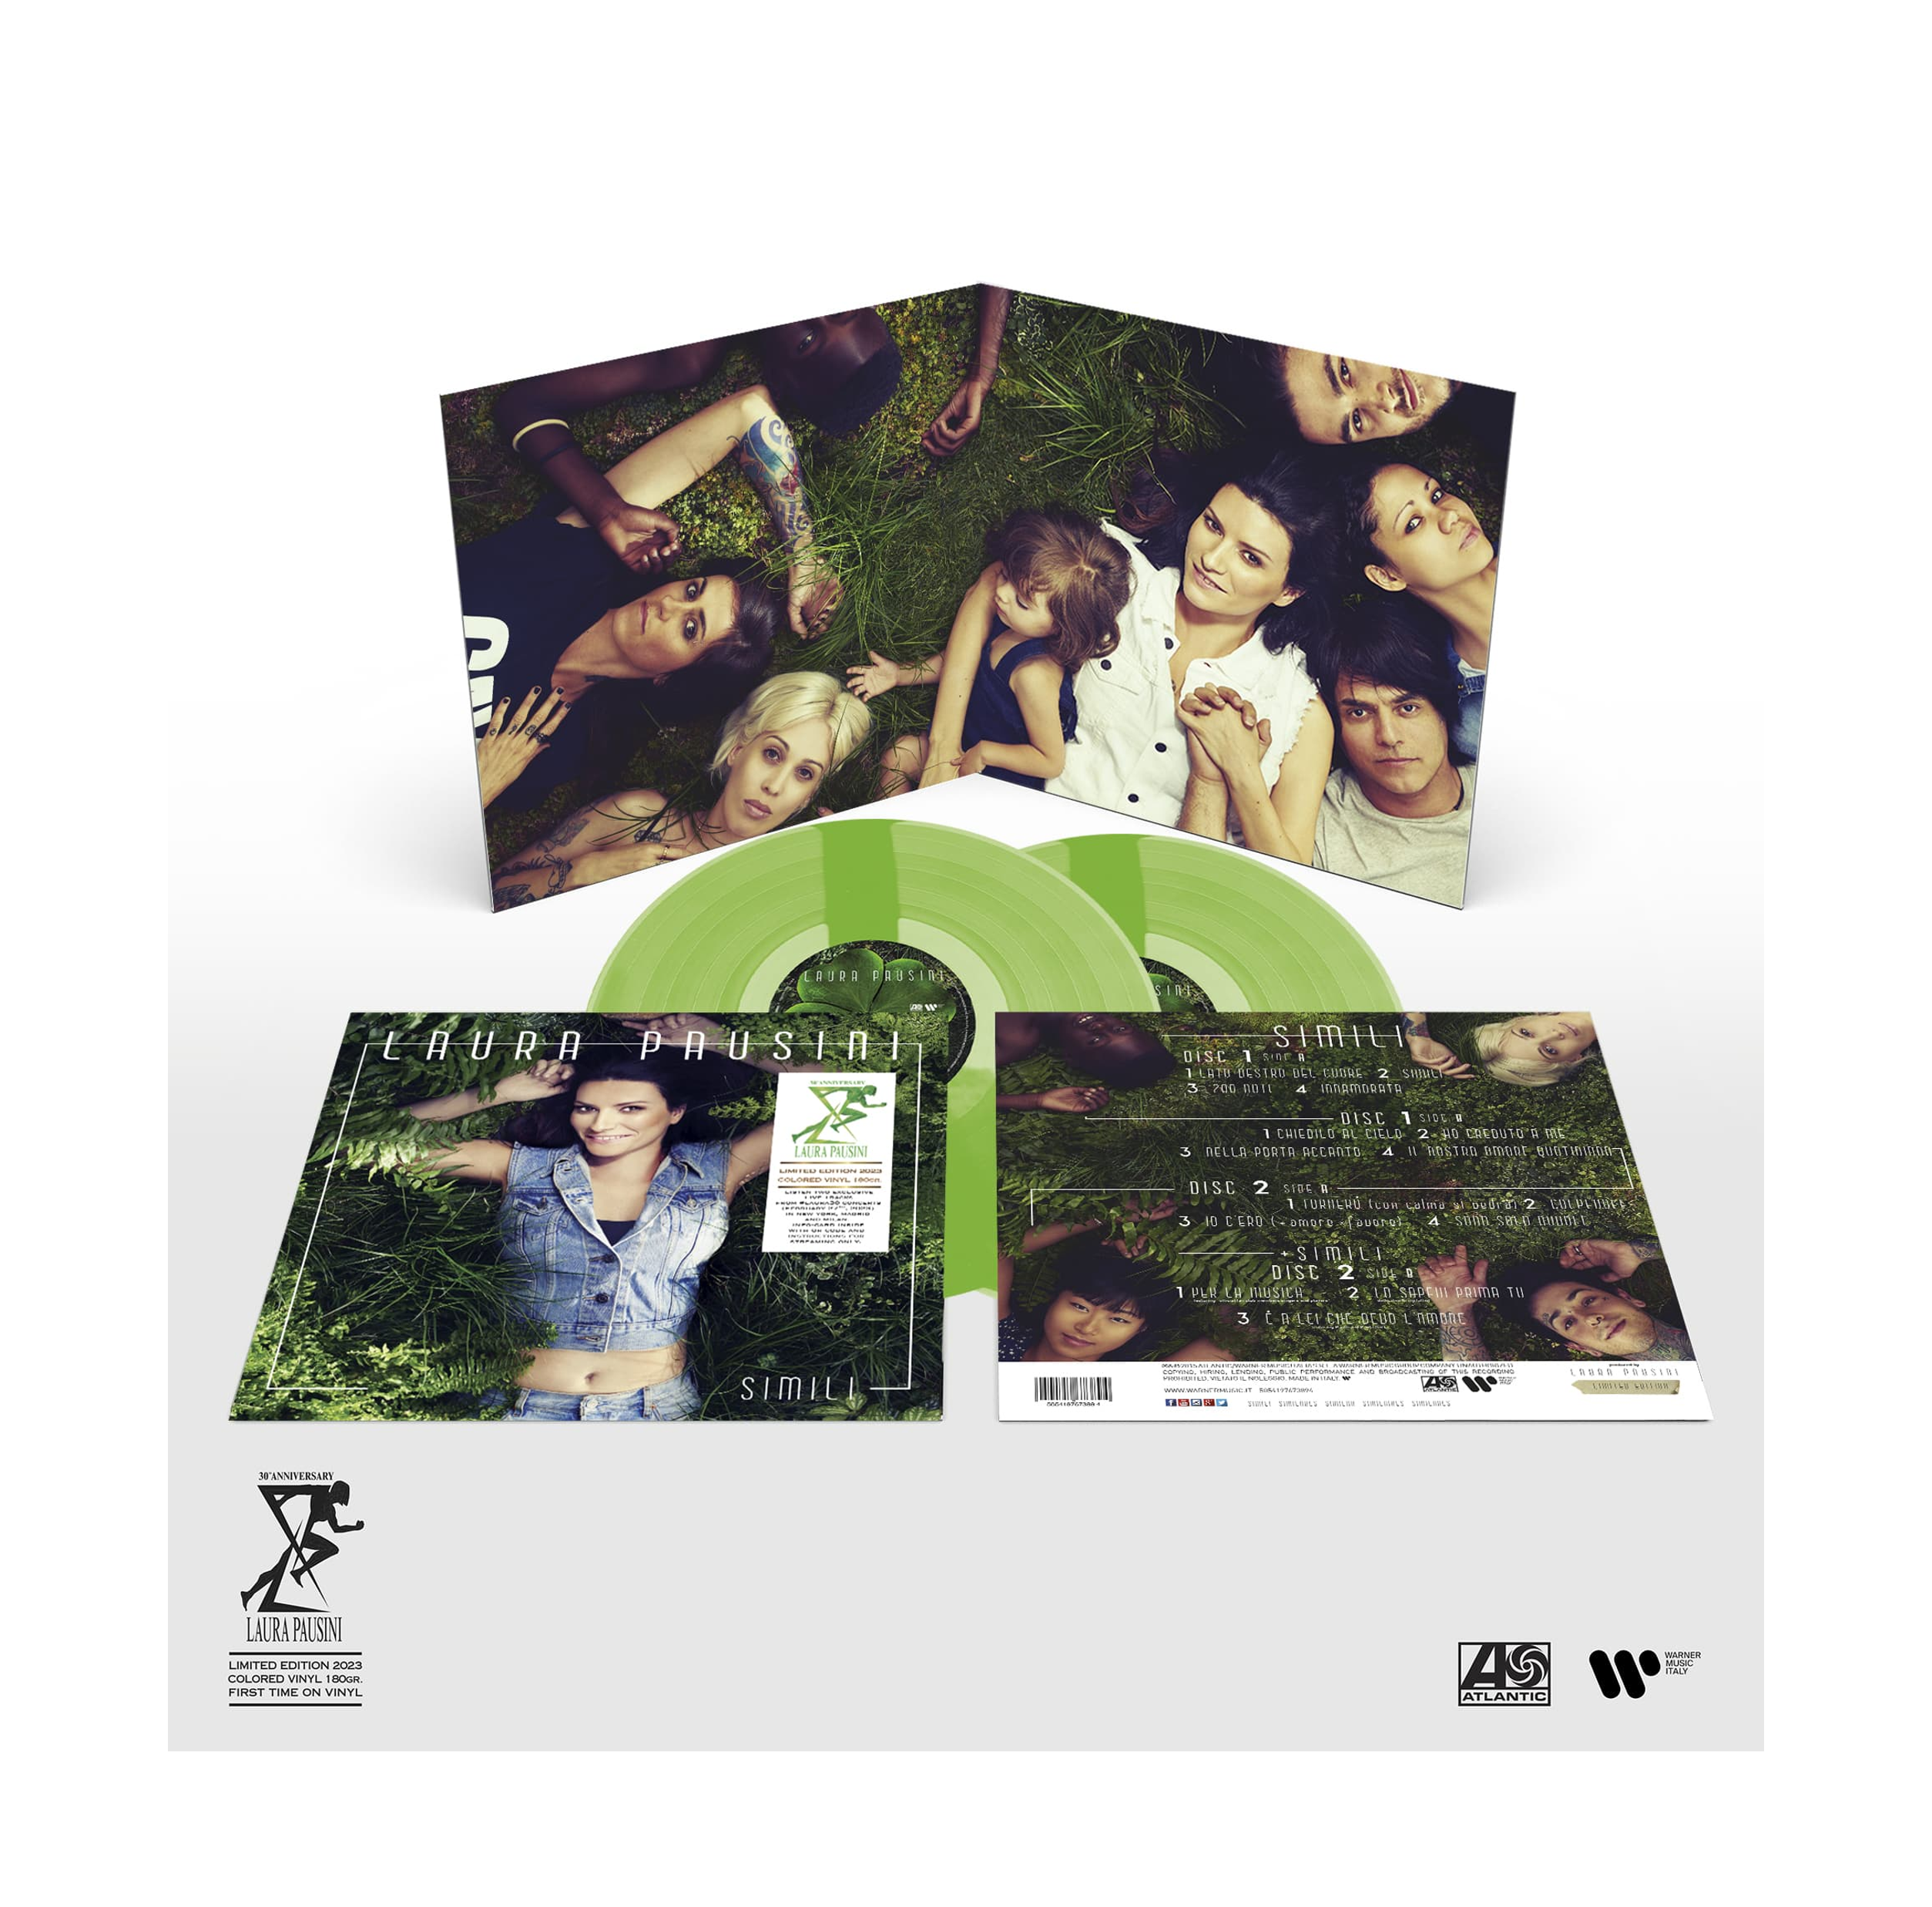 Simili (2LP 180g Transparent Green Vinyl. Limited & Numbered Edition)